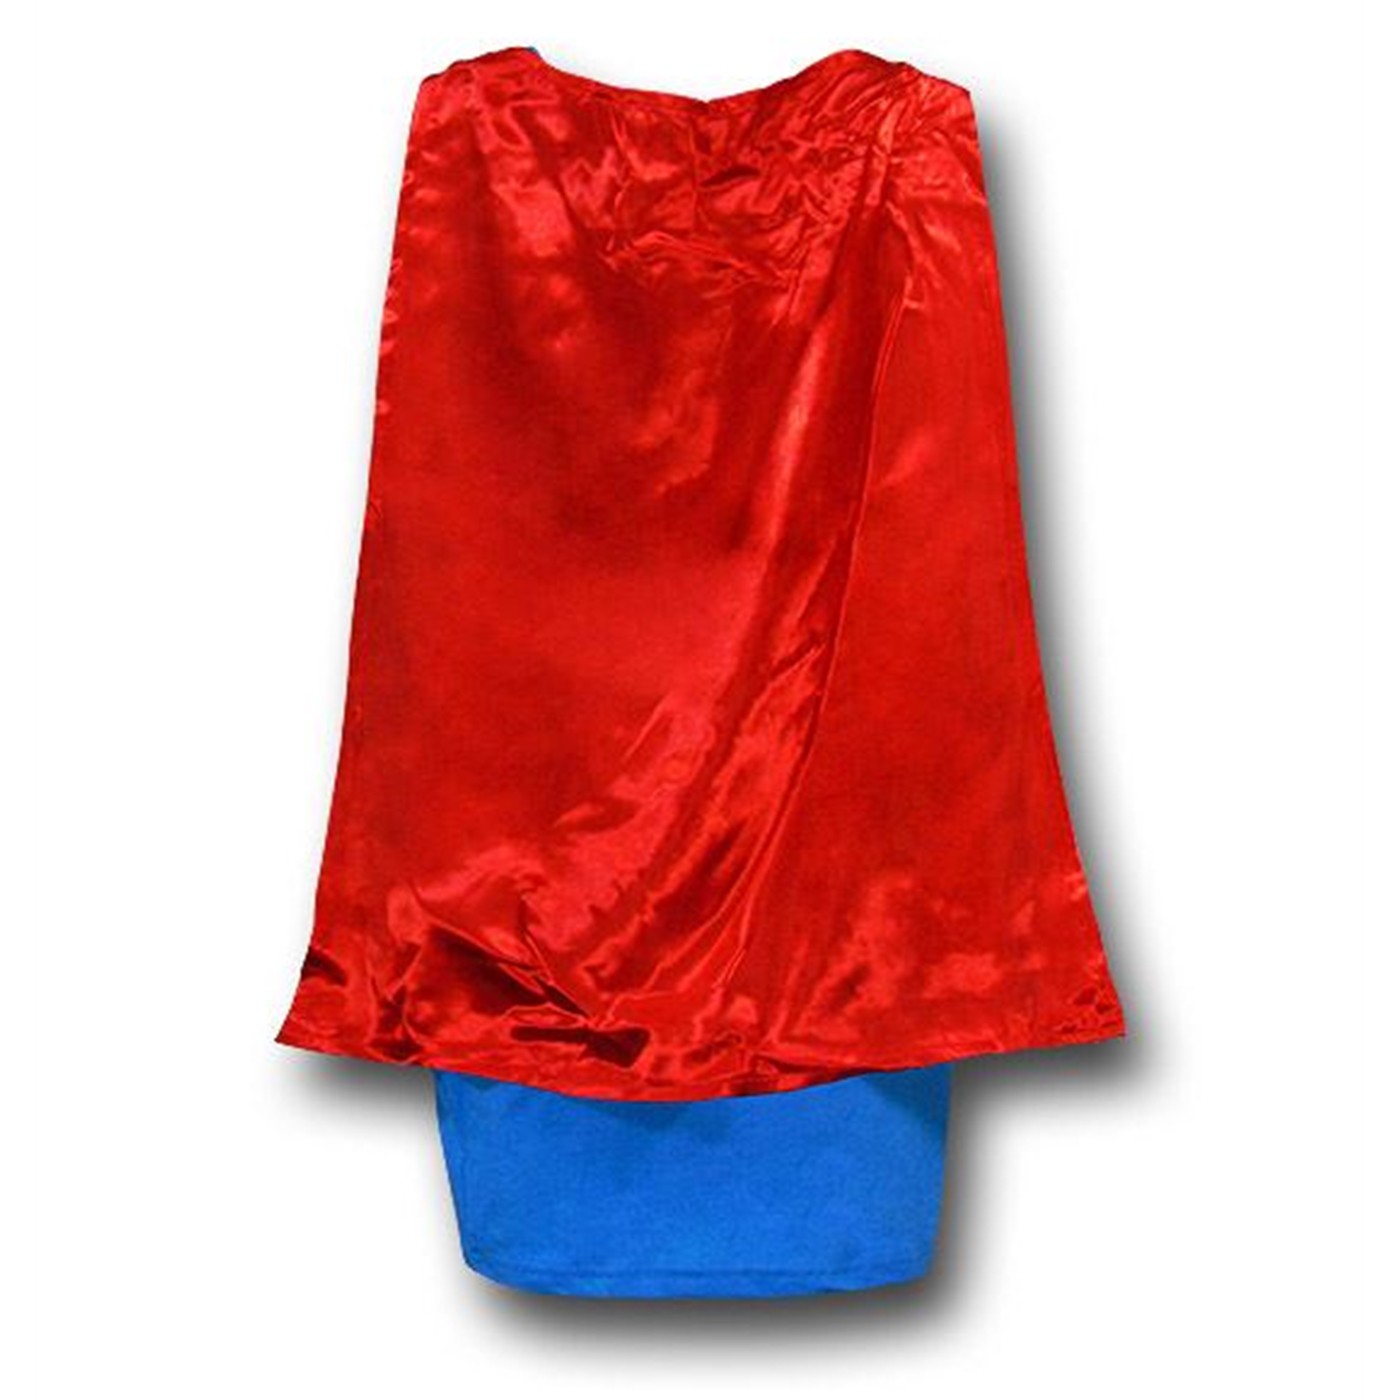 Superman Women's Sleep Tank w/Cape